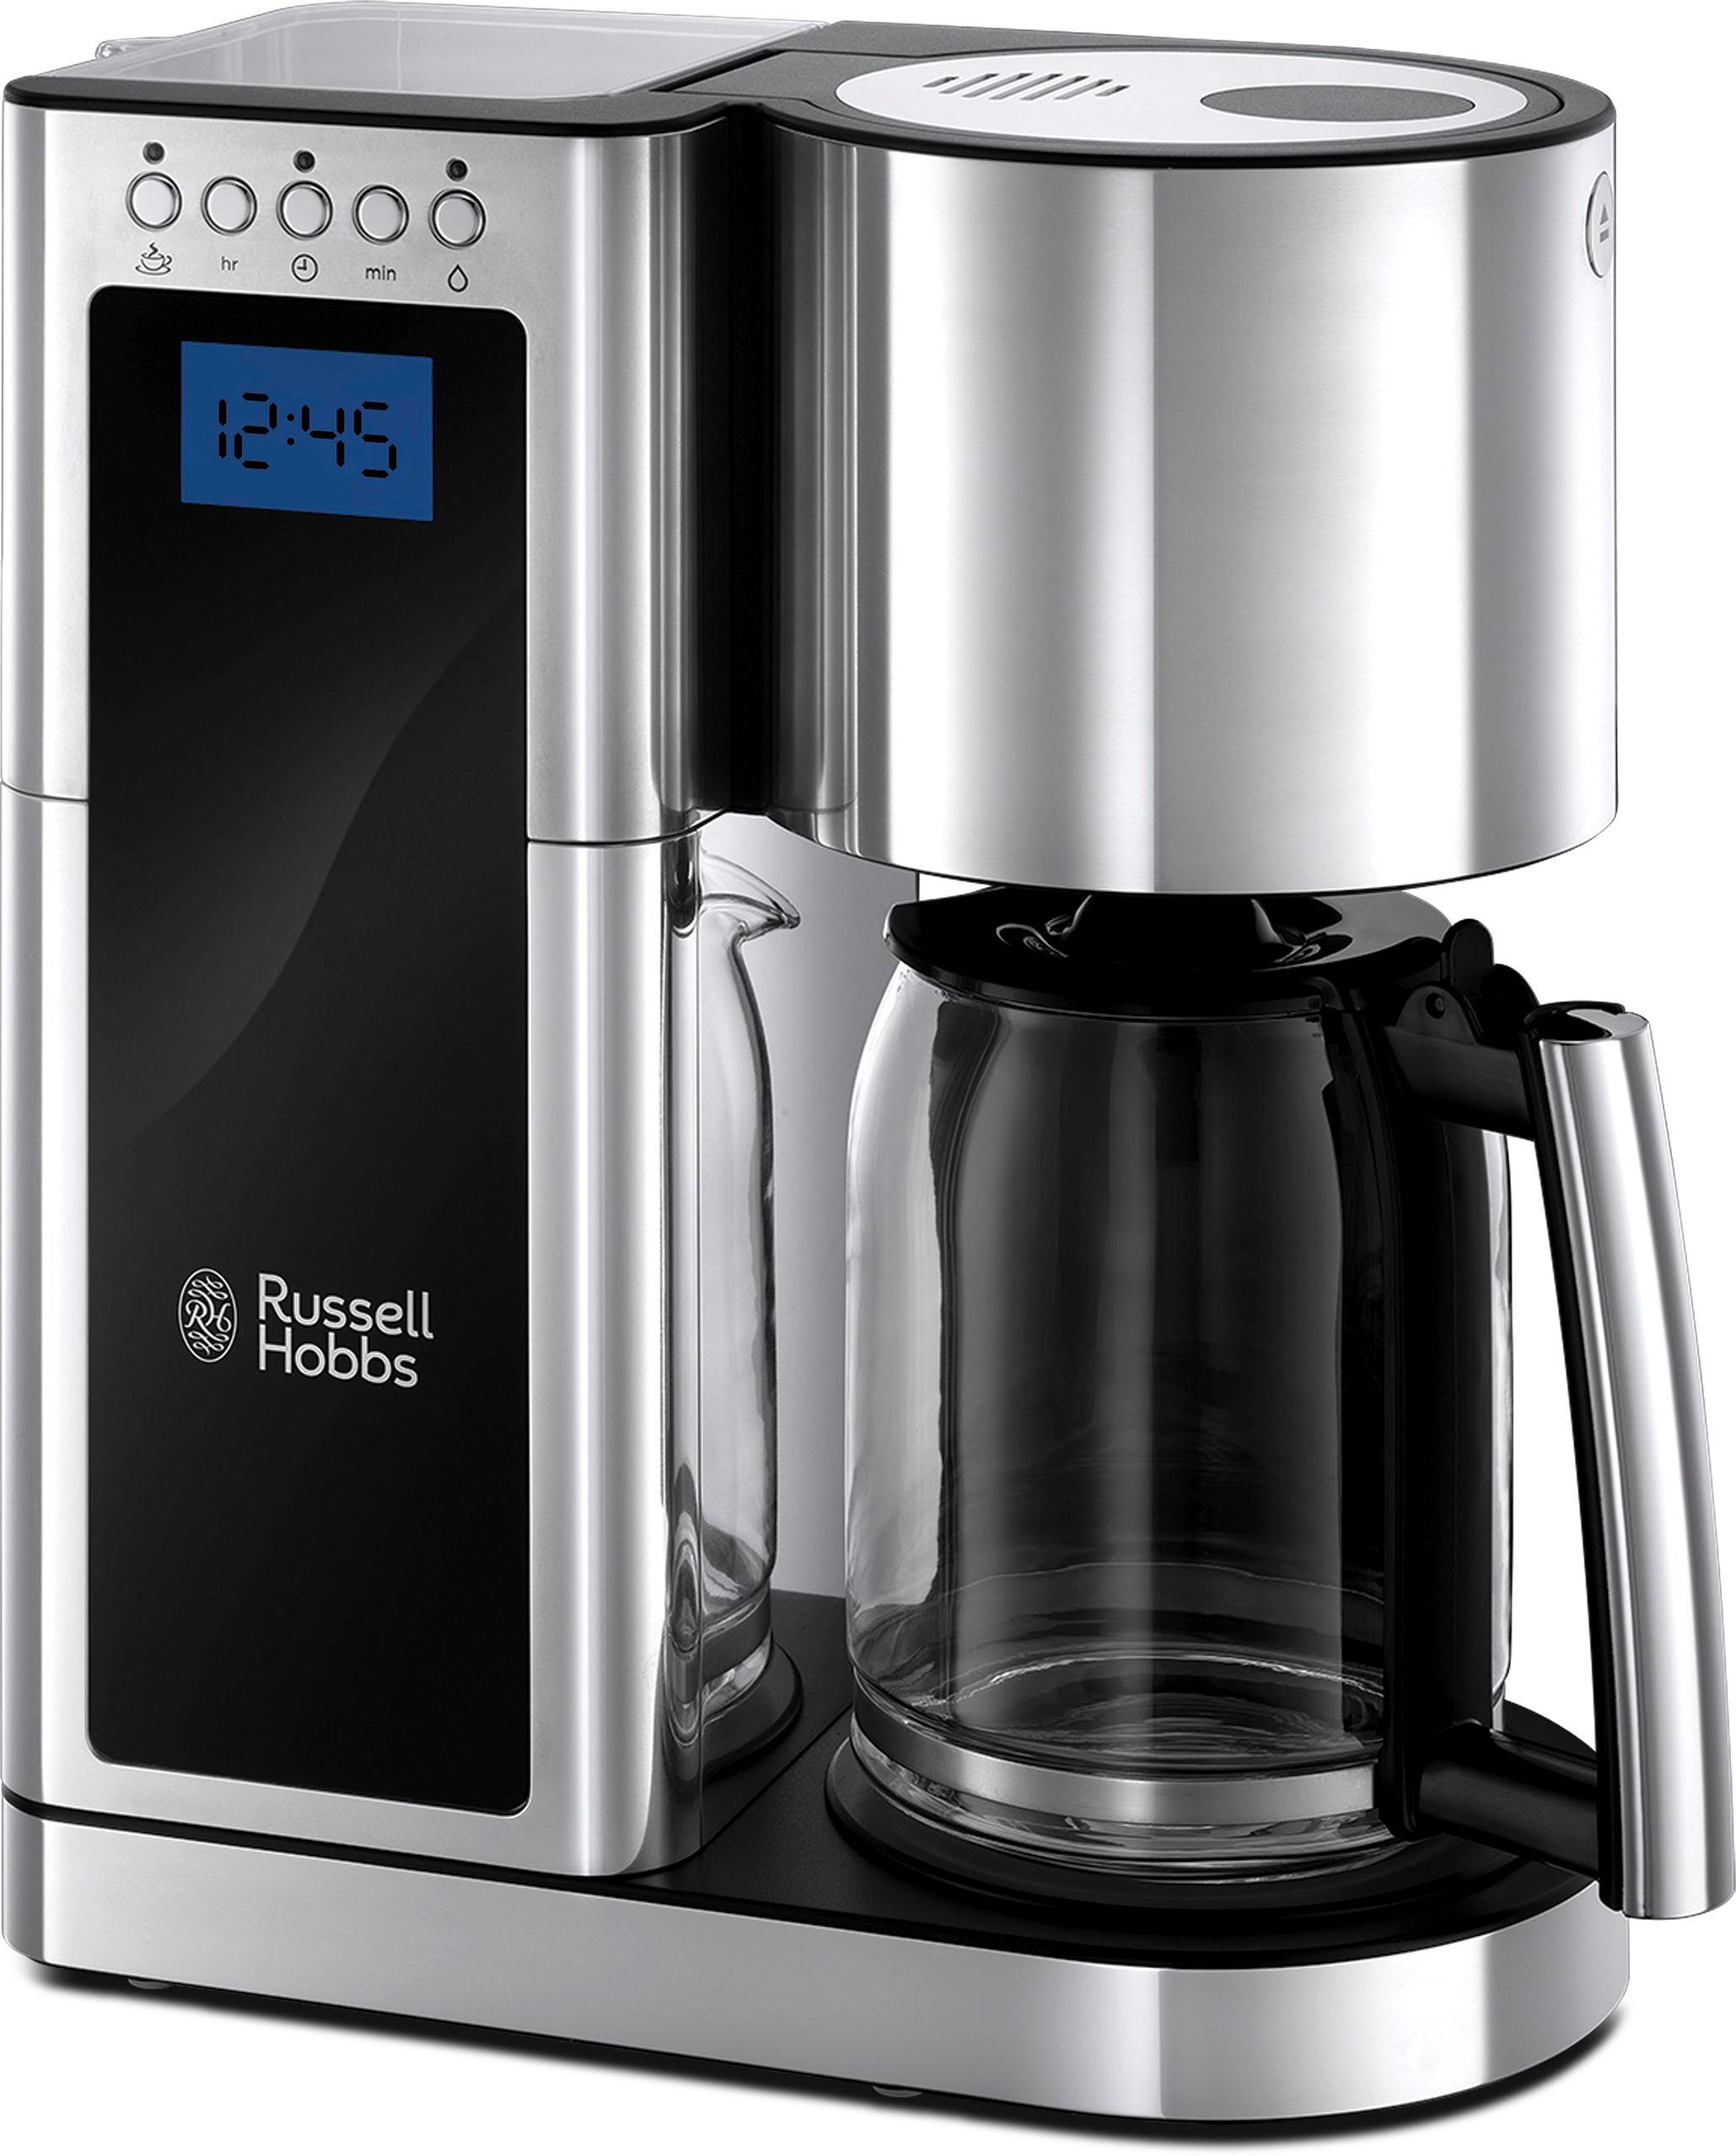 RUSSELL HOBBS Filterkaffeemaschine "Elegance 23370-56", 1,25 l Kaffeekanne, 1x4, 1600 Watt